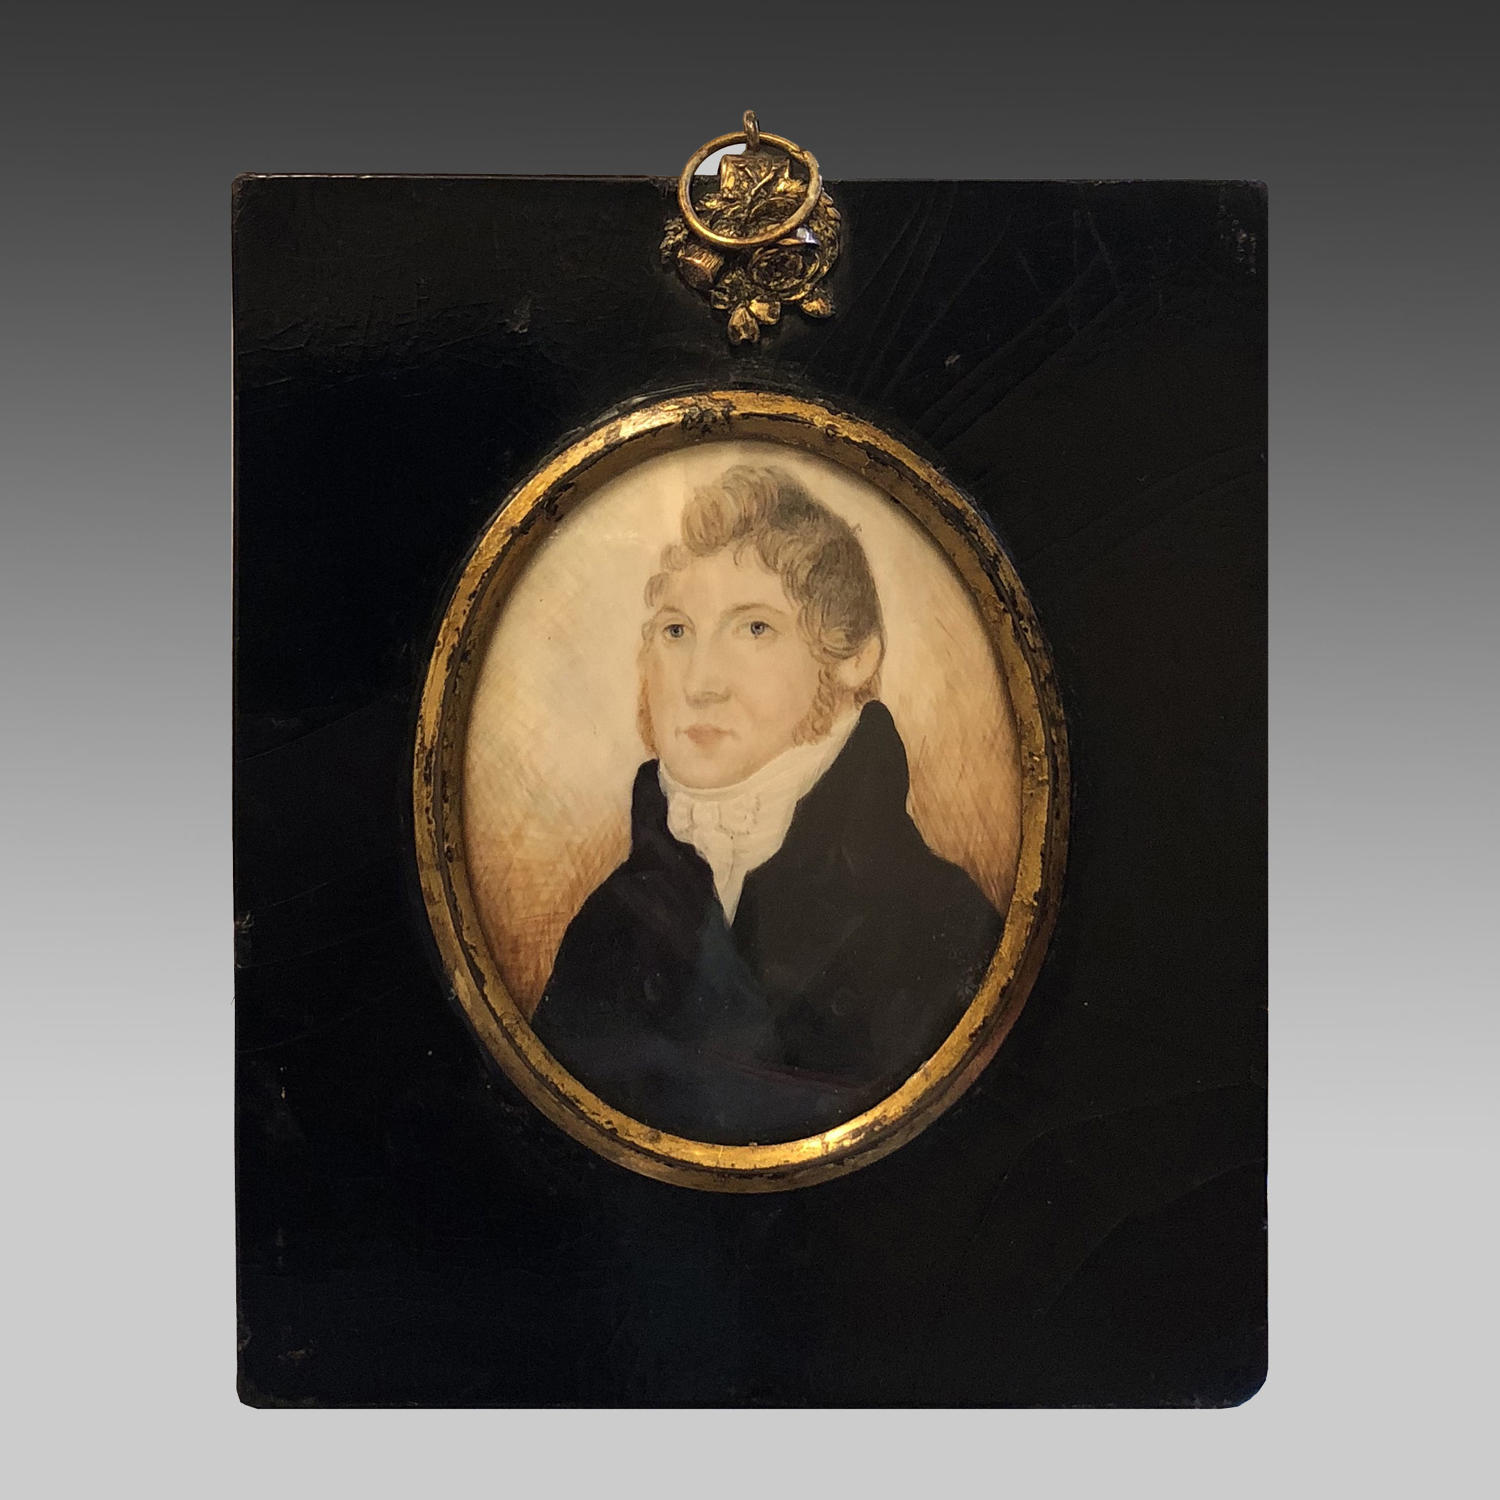 Regency miniature portrait of a gentleman